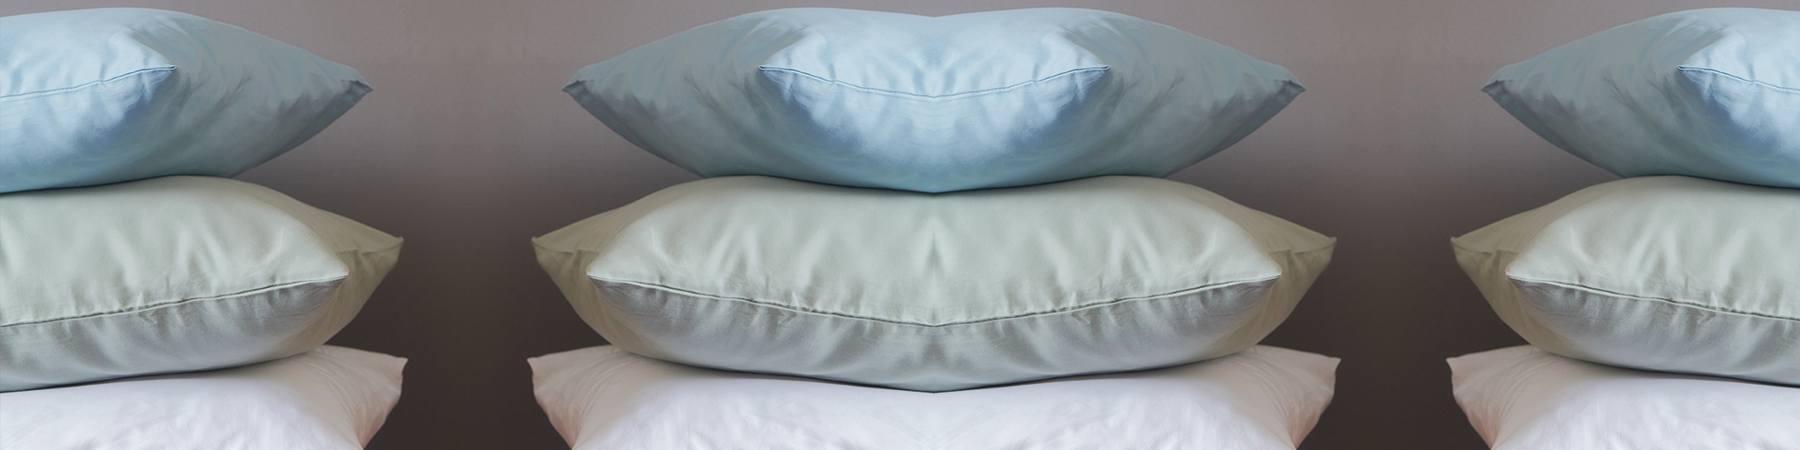 Bedding - Pillow Cases